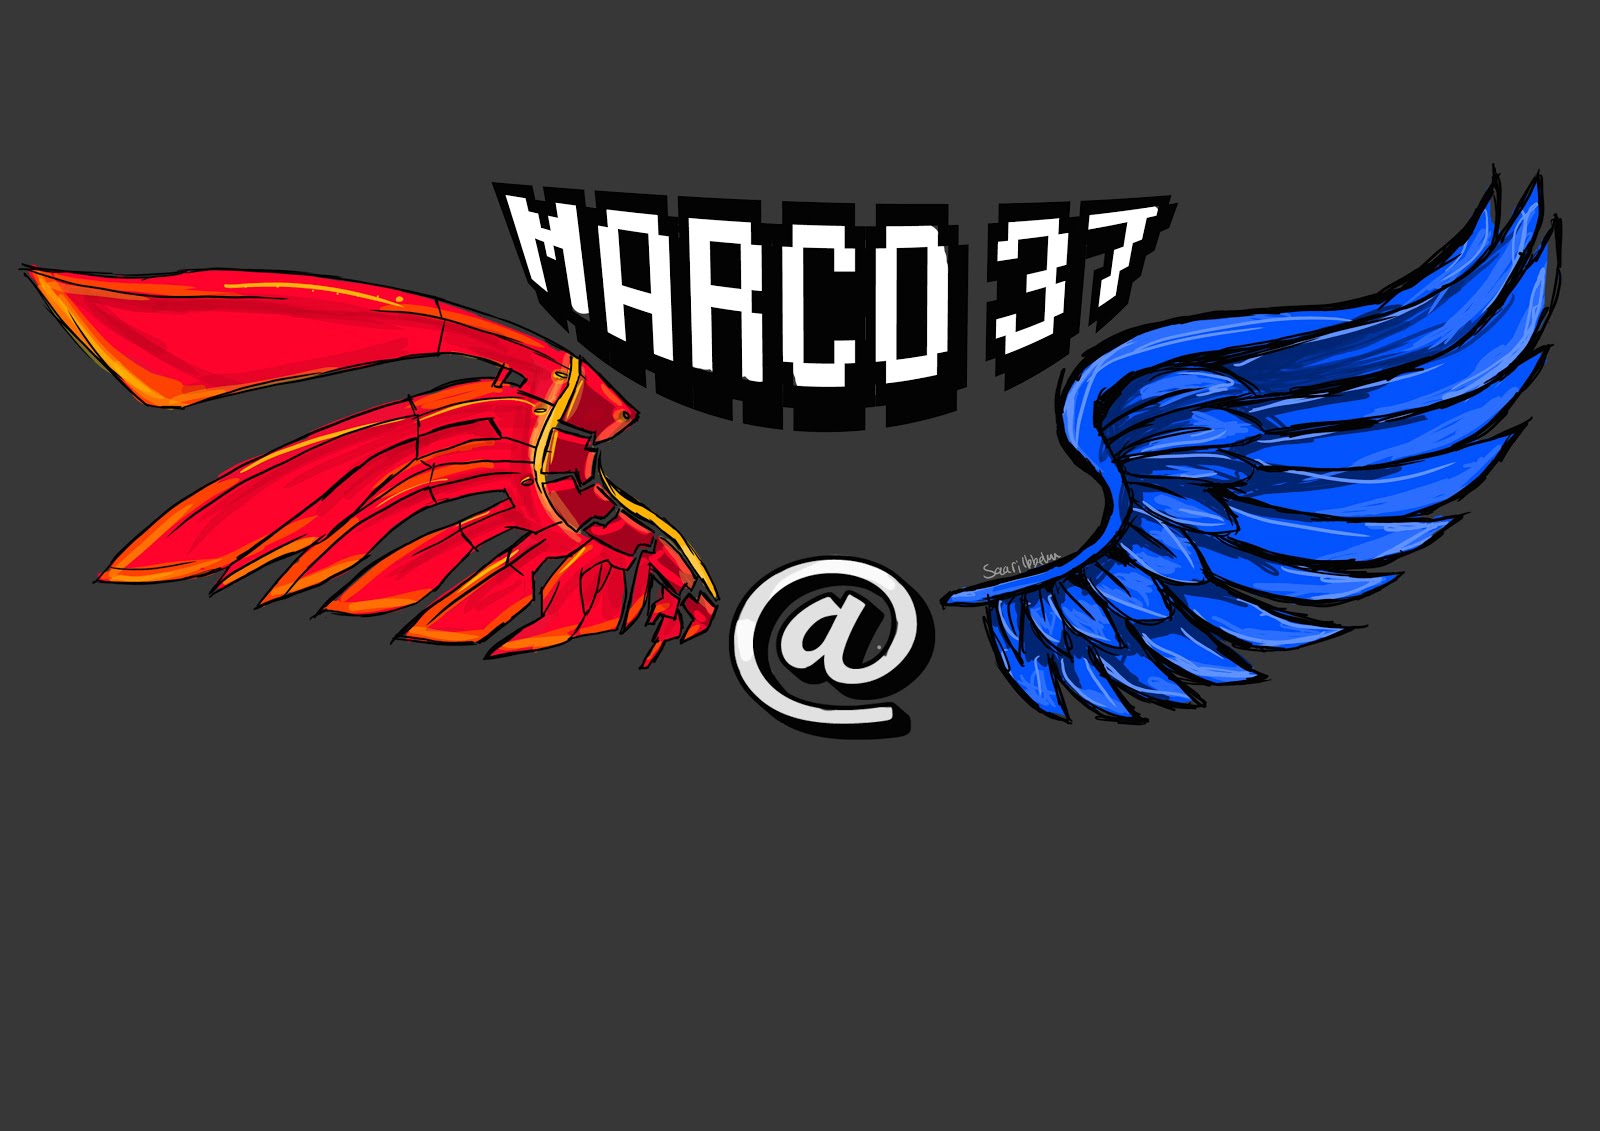 Marco 37 Logo